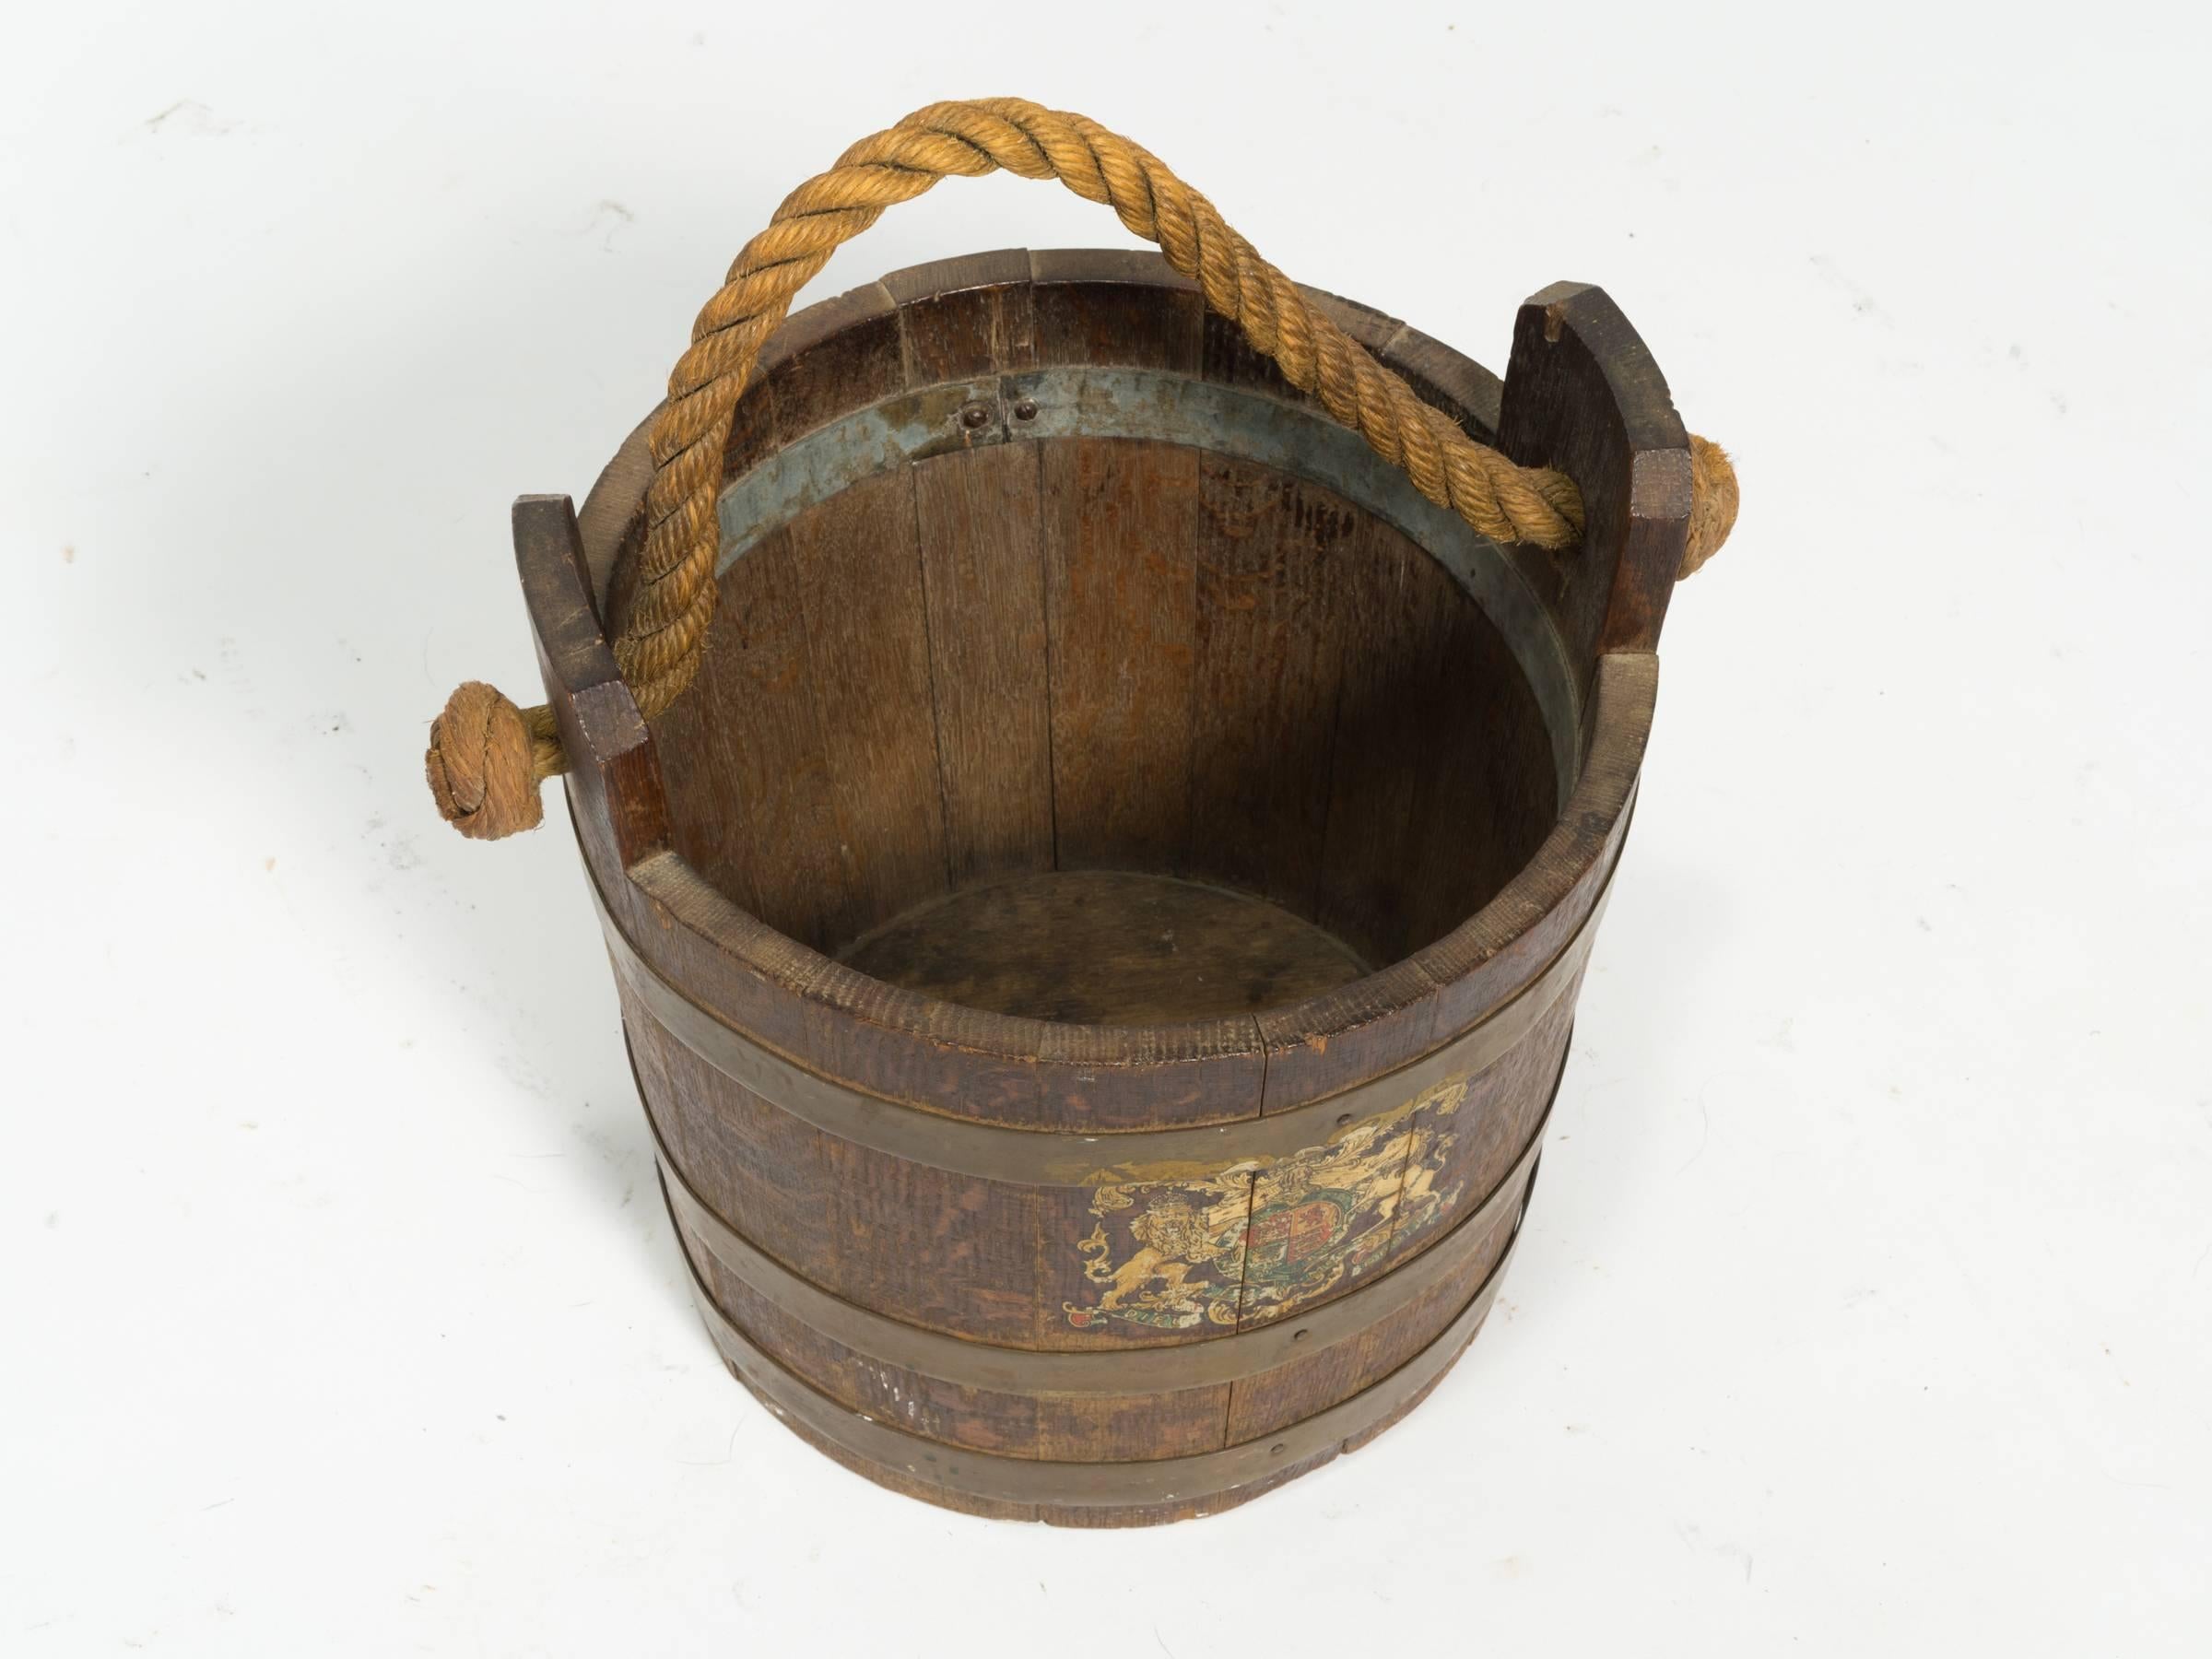 19th century English fire bucket.